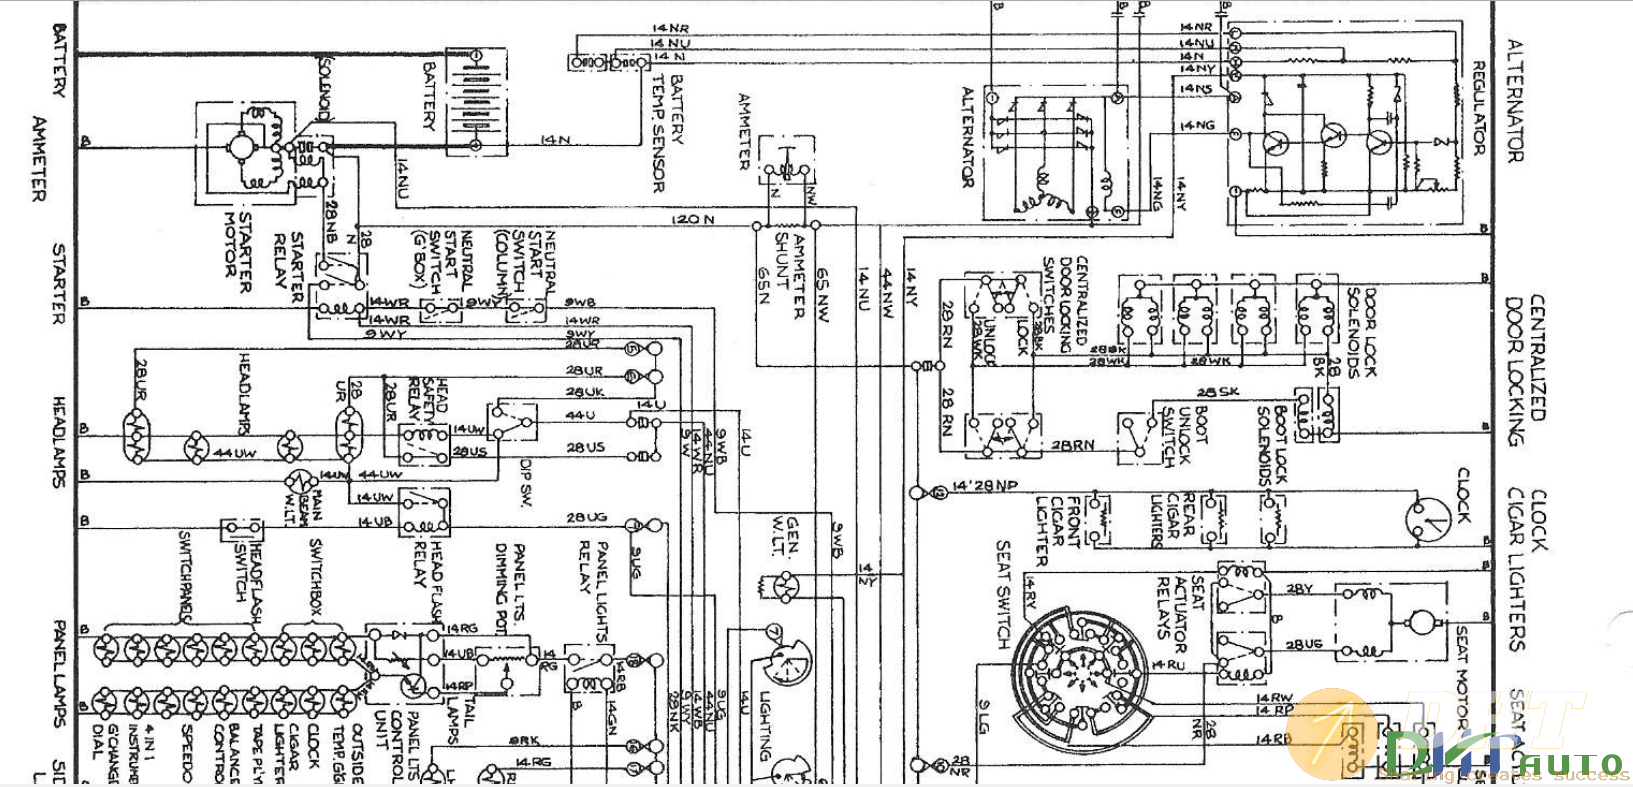 1986 Rolls Royce Silver Spur Wiring Diagram - Wiring Diagram